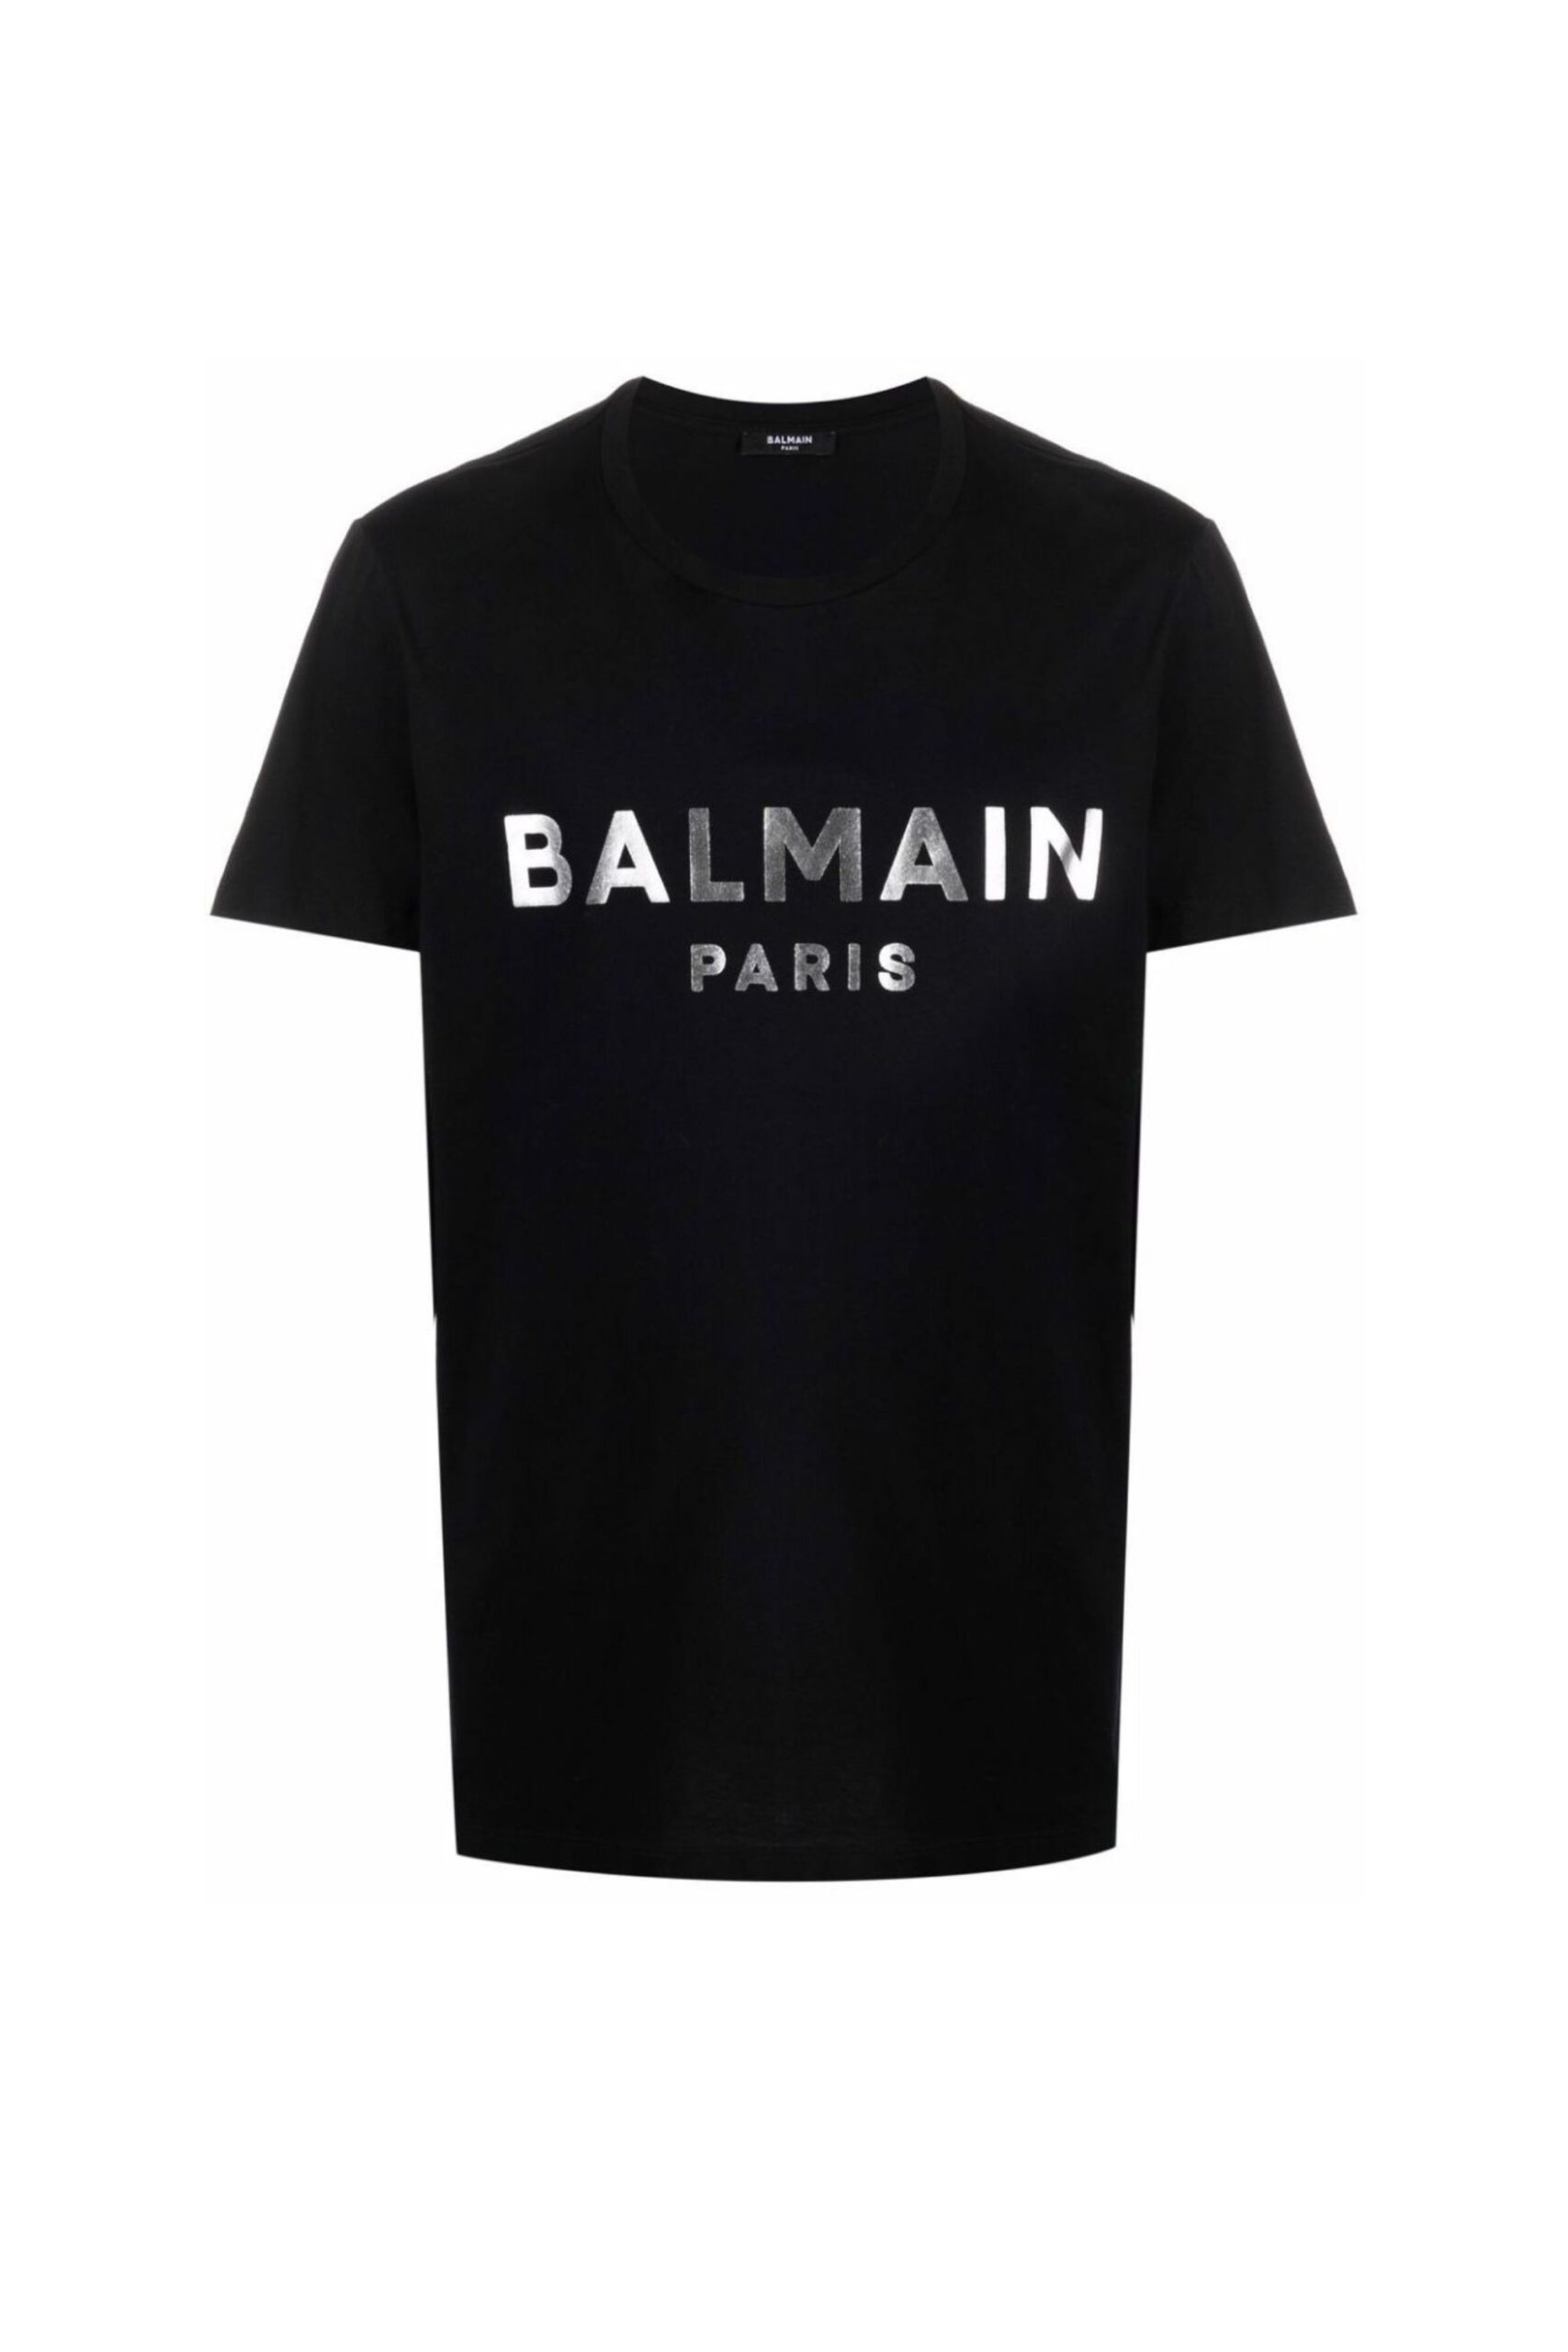 Balmain Paris T Shirt In Platino